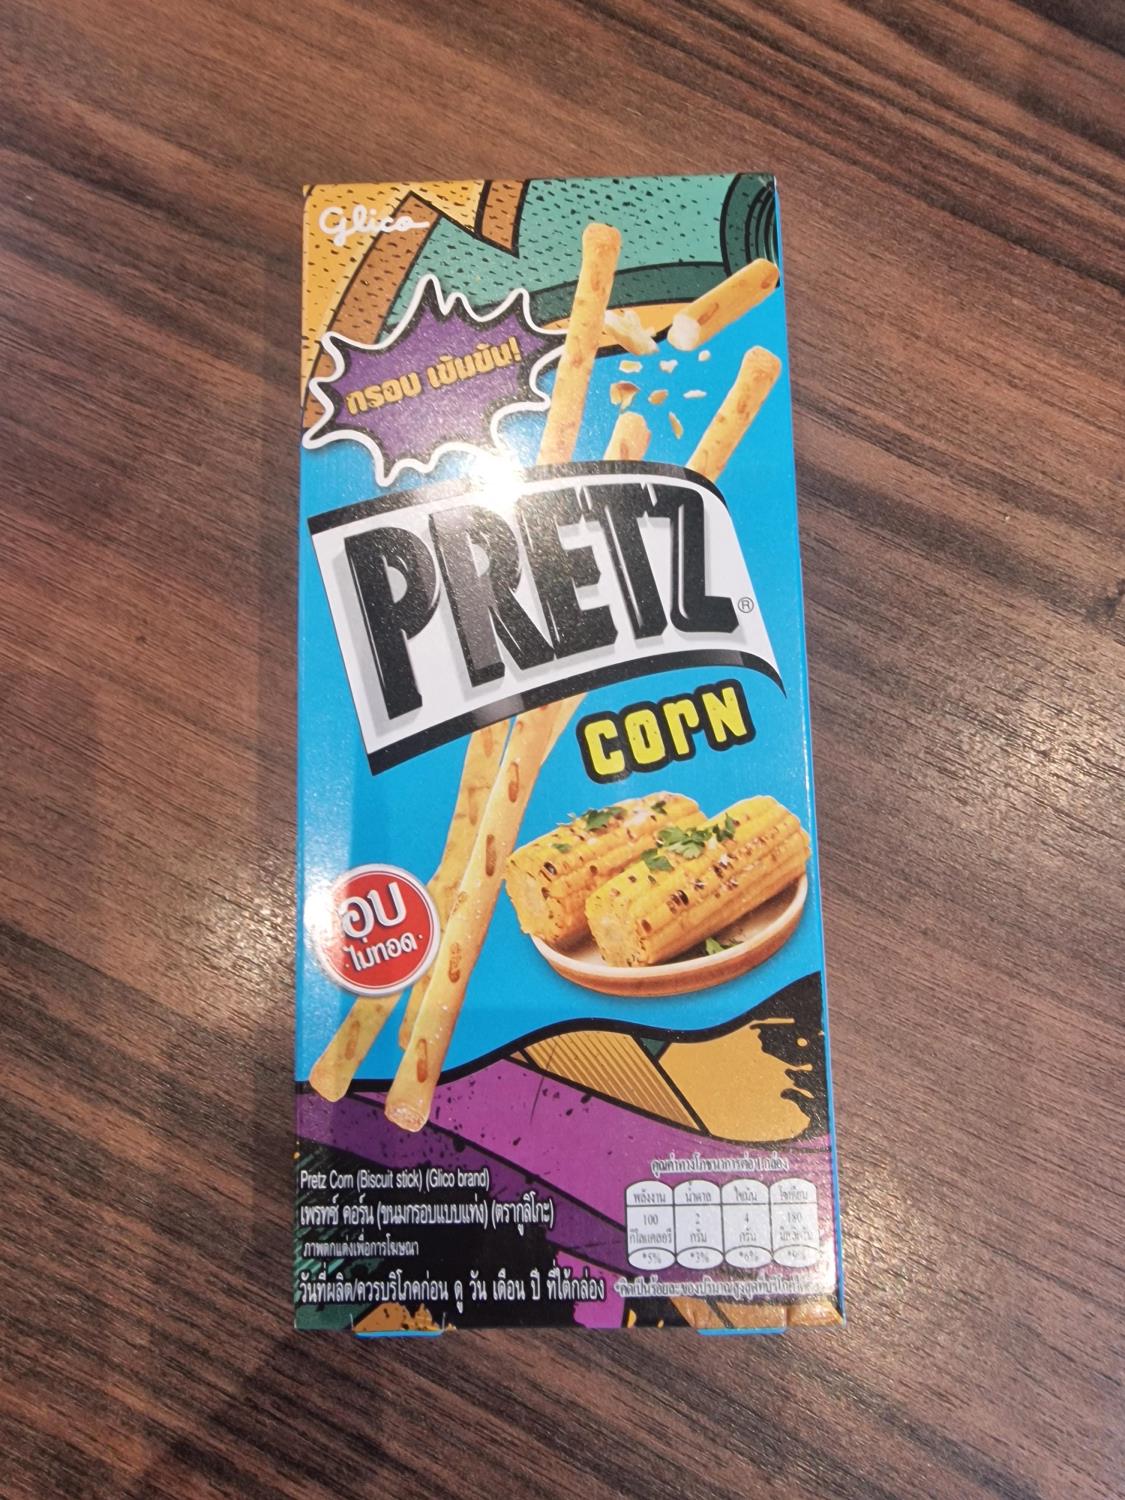 Pretz corn sticks